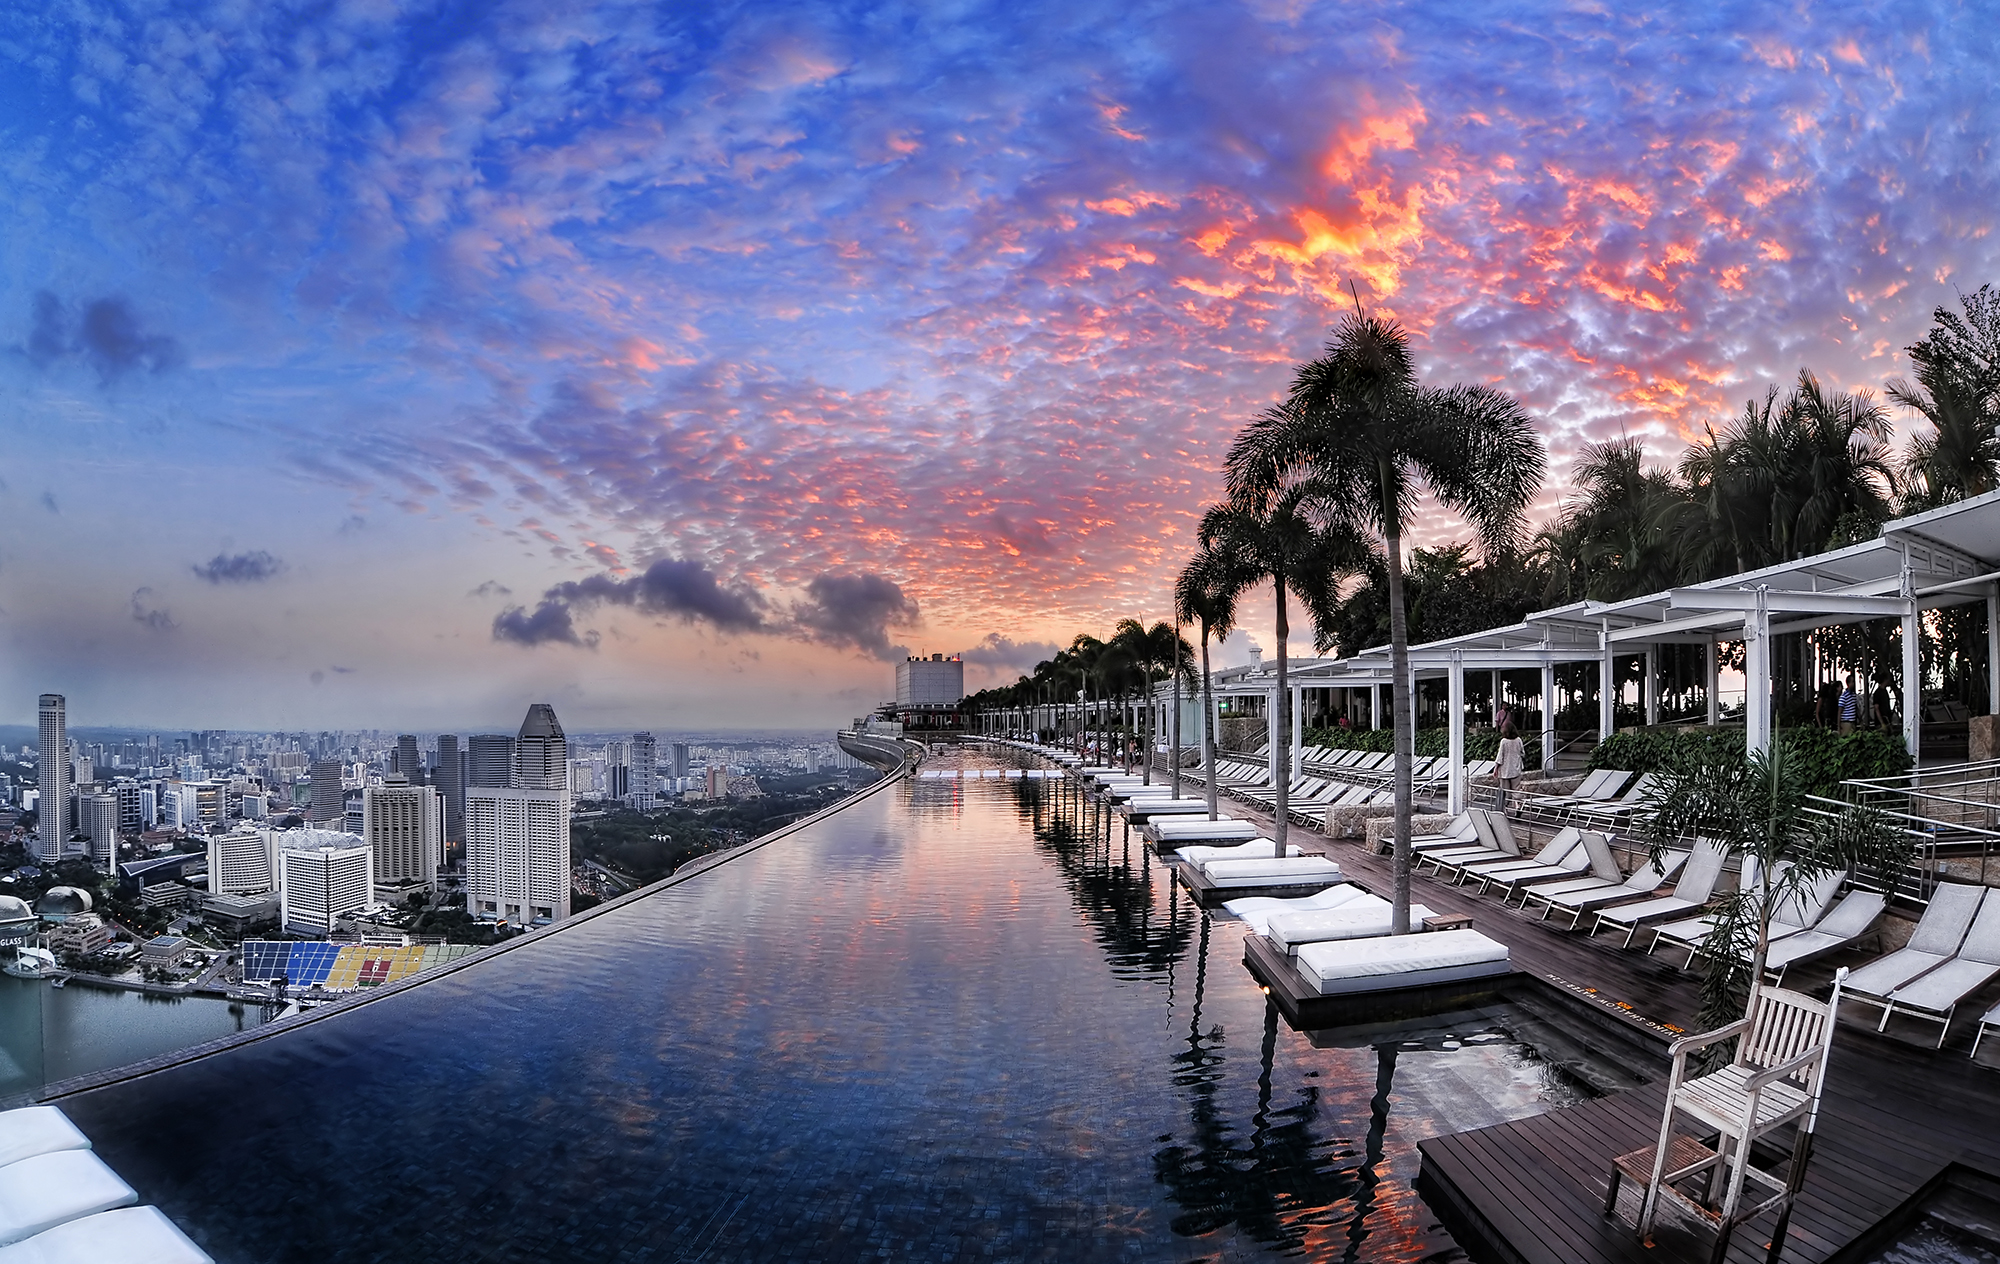 City Hotel Marina Bay Sands Pool Singapore Sunset 2000x1264